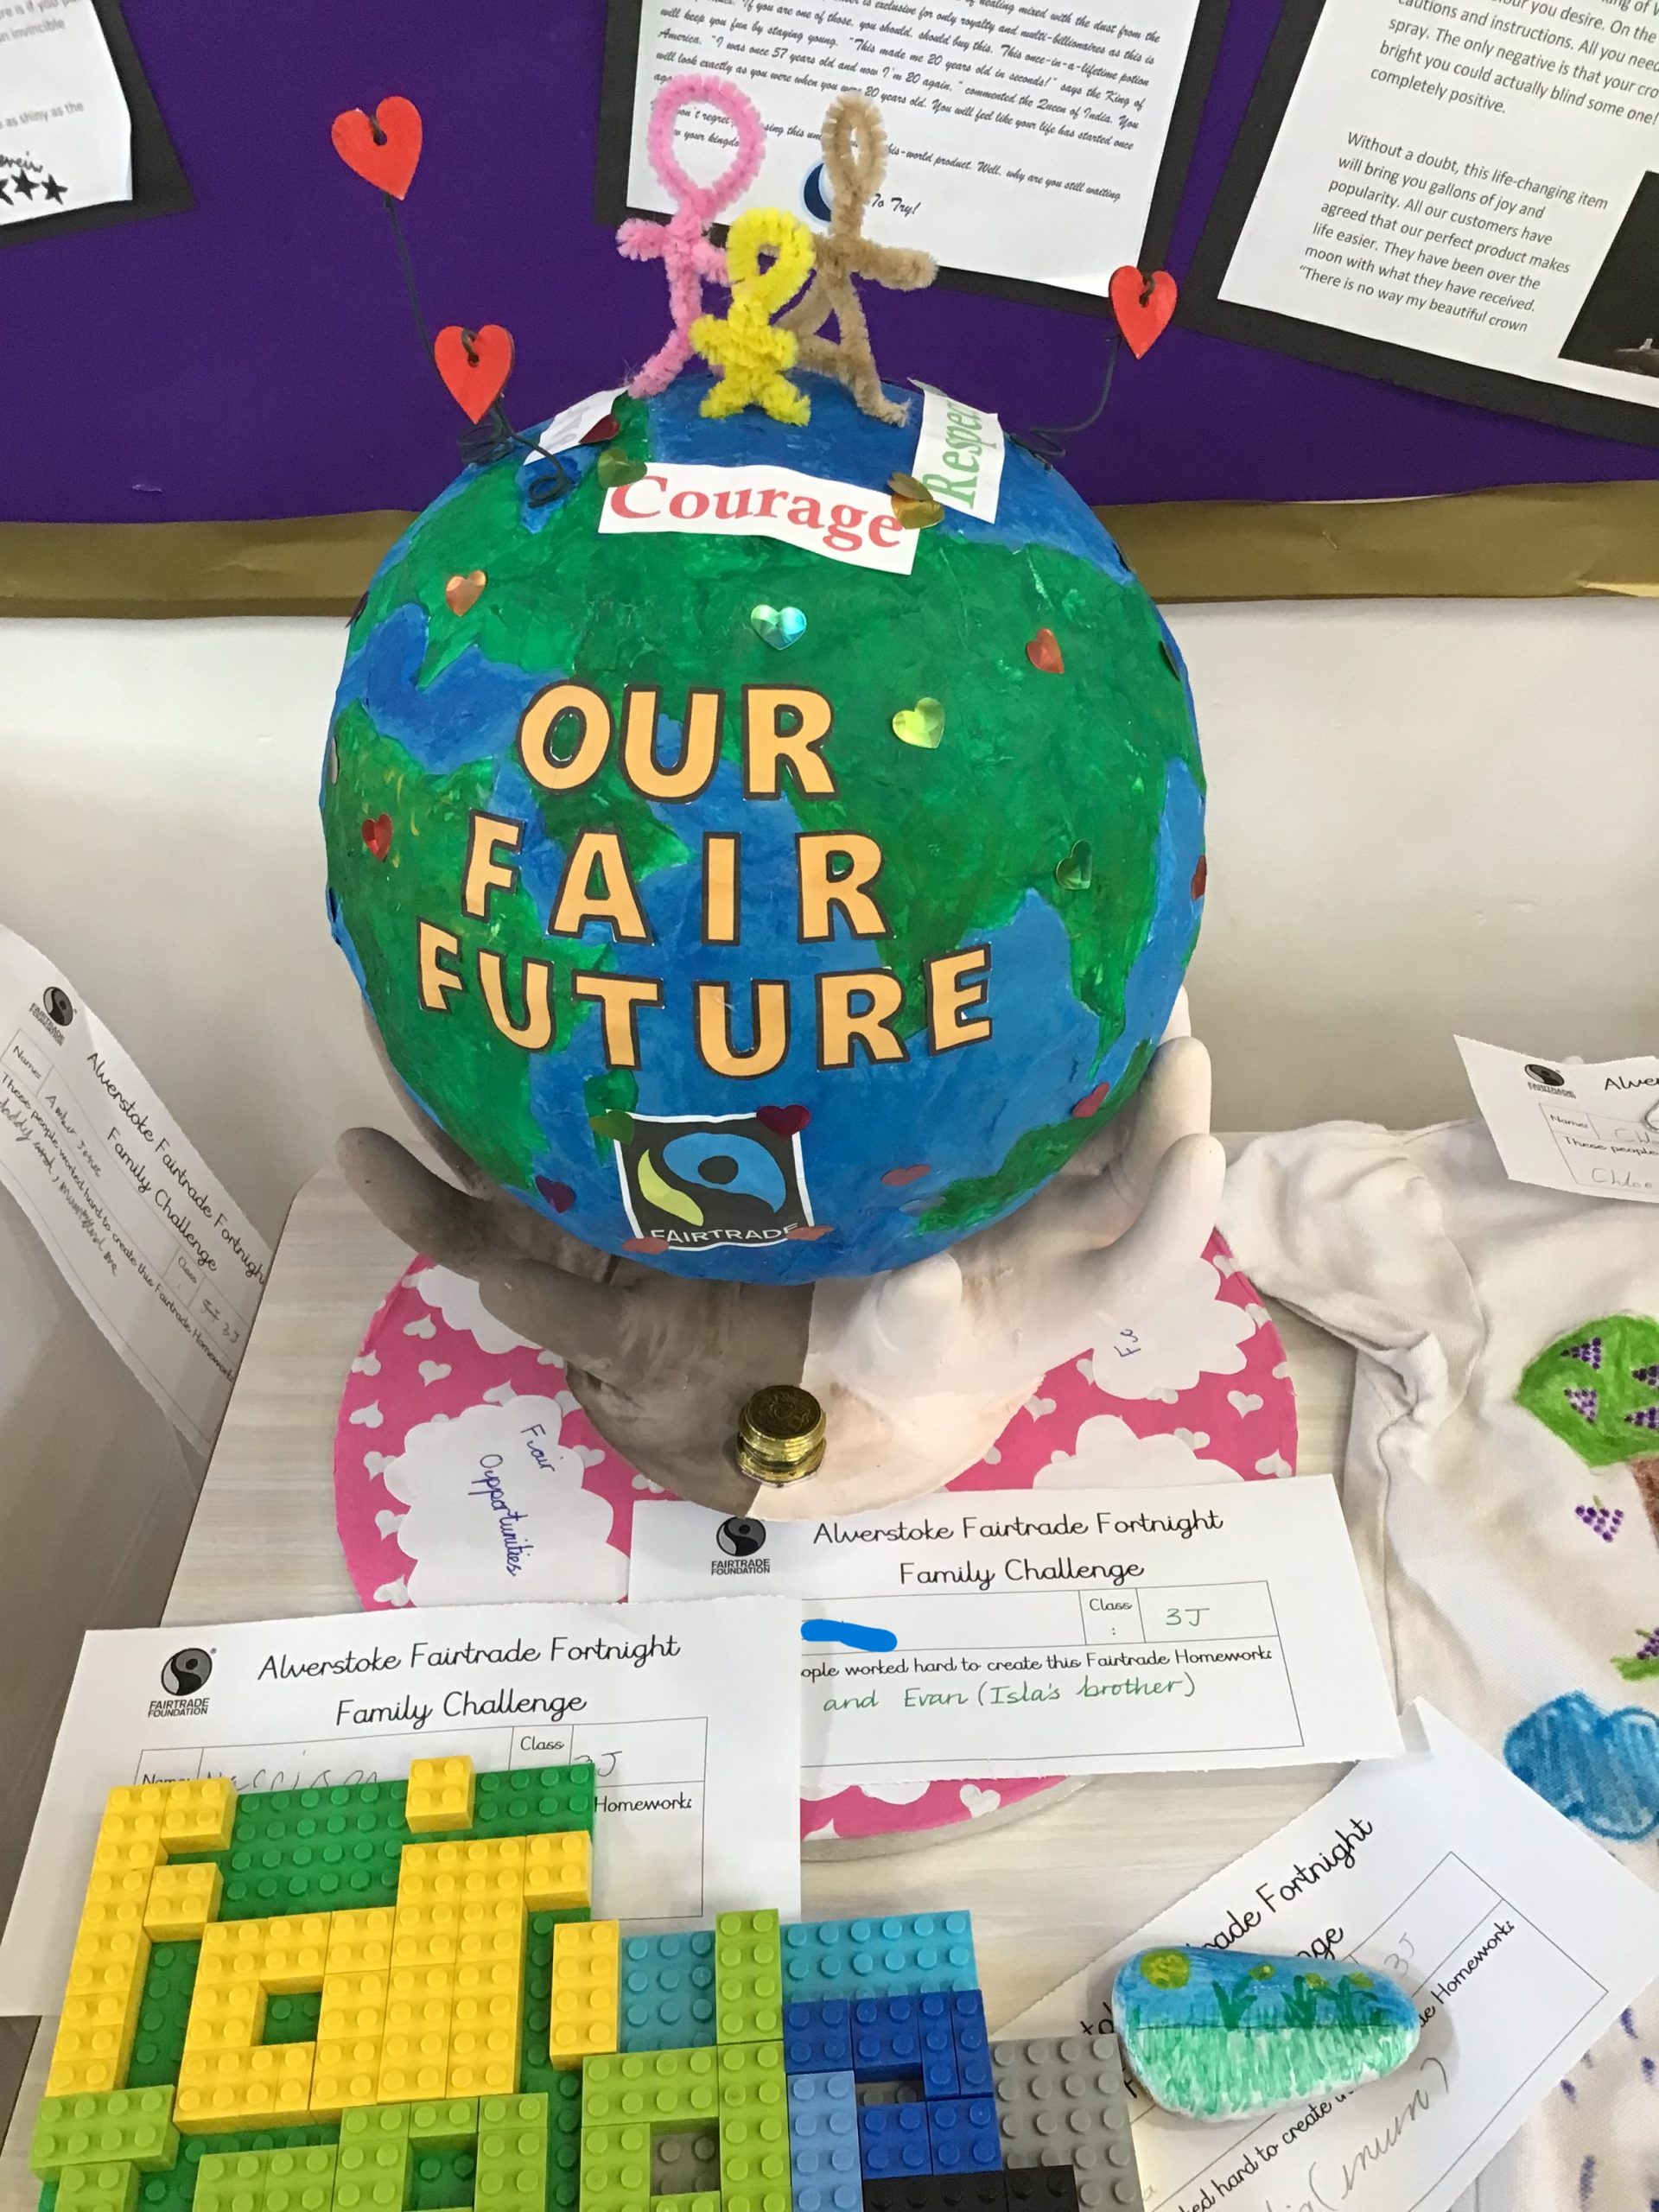 pupils work on Fairtrade